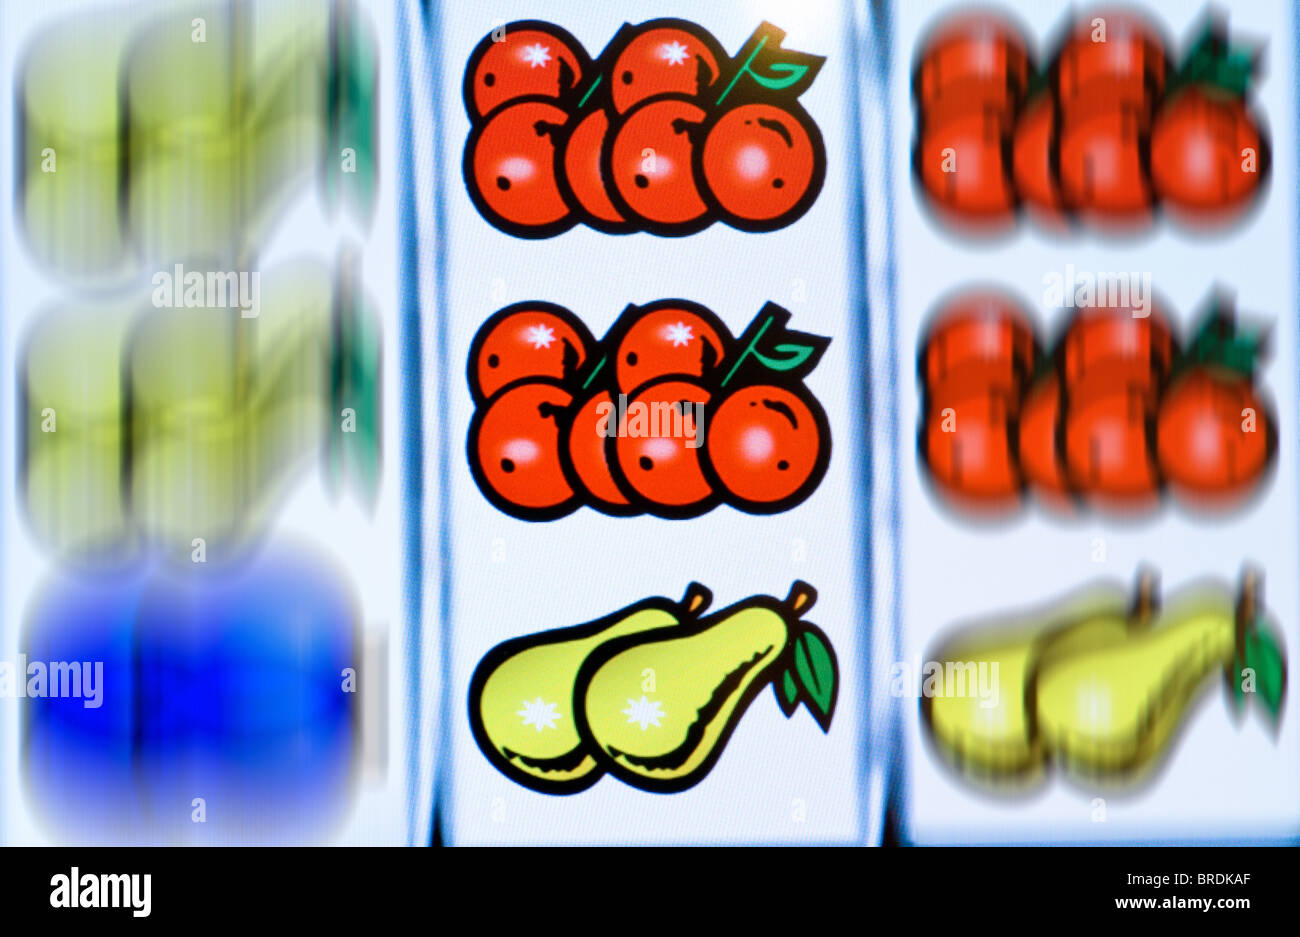 slot machine Stock Photo